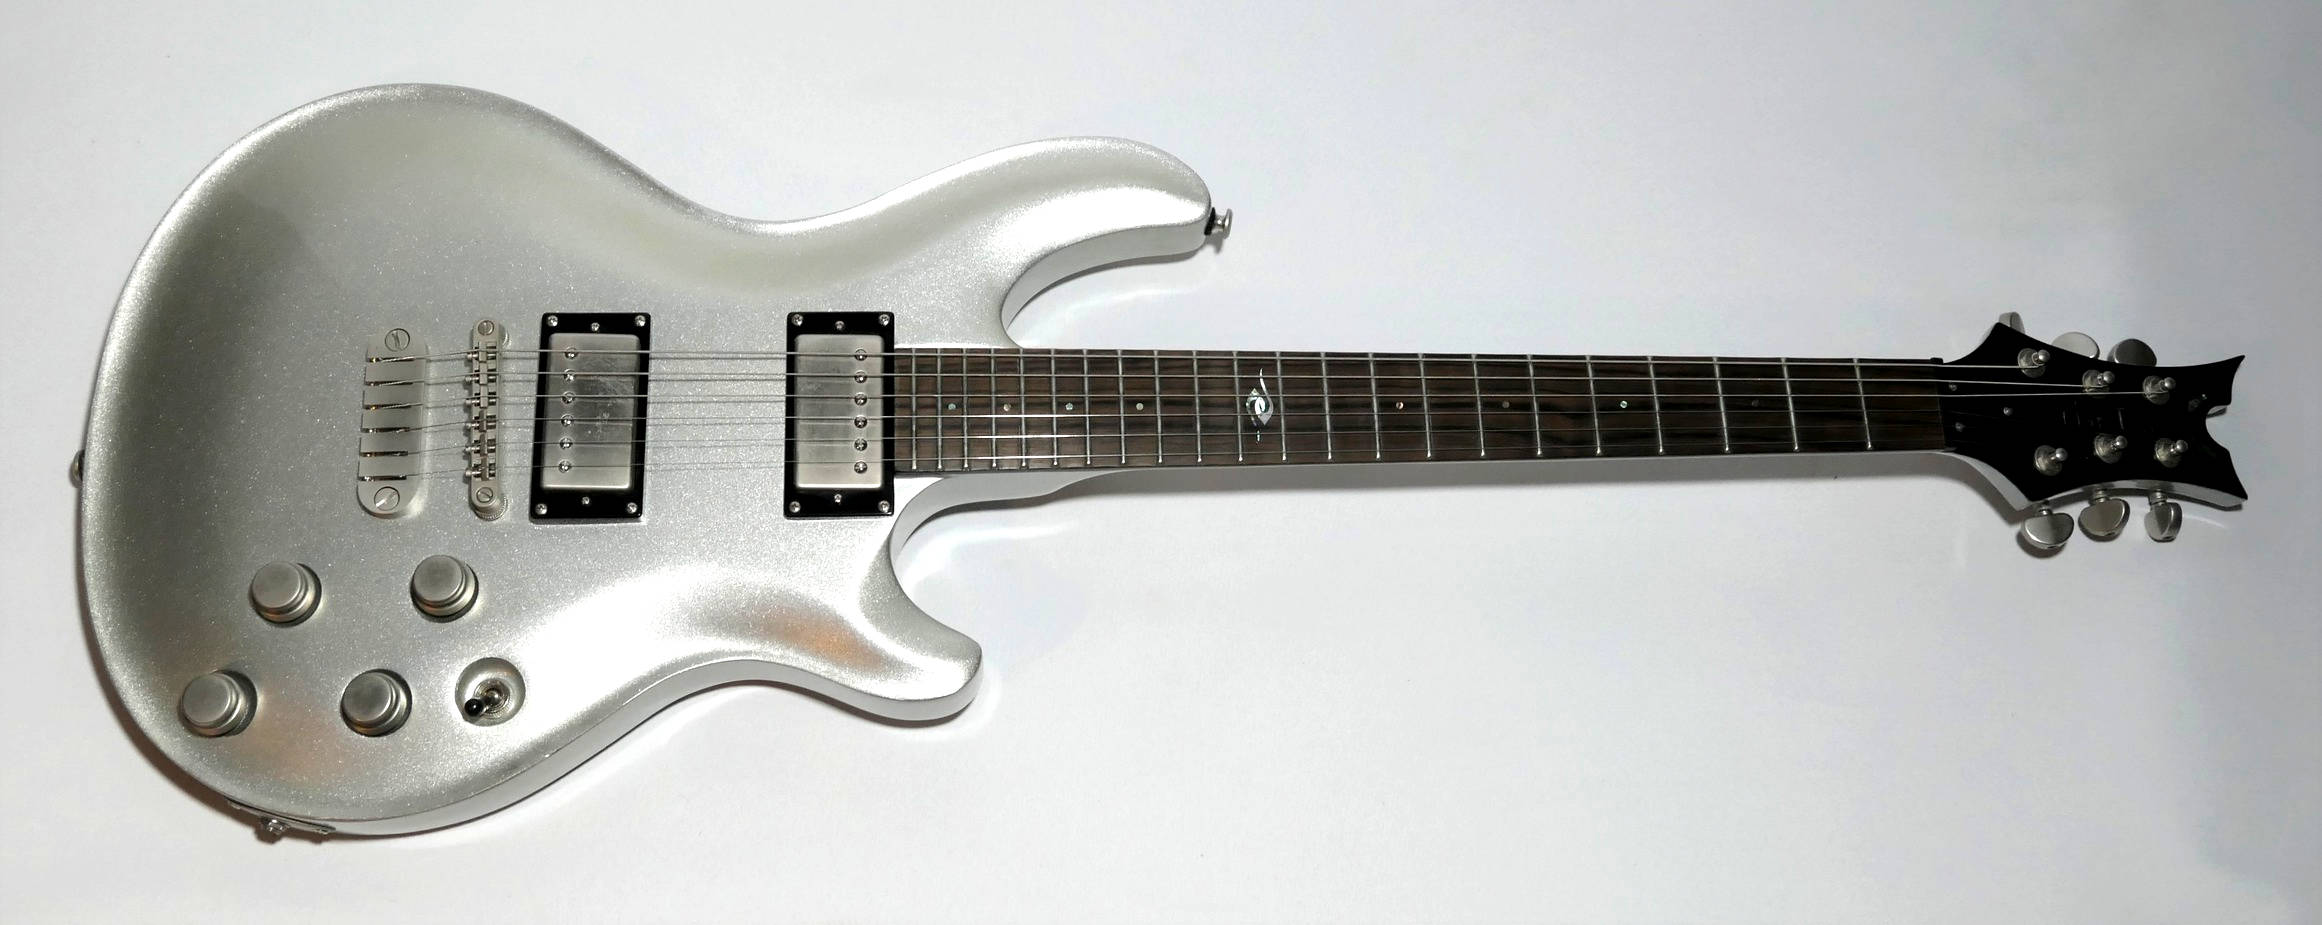 E-Gitarre DEAN Hardtail silver sparkle